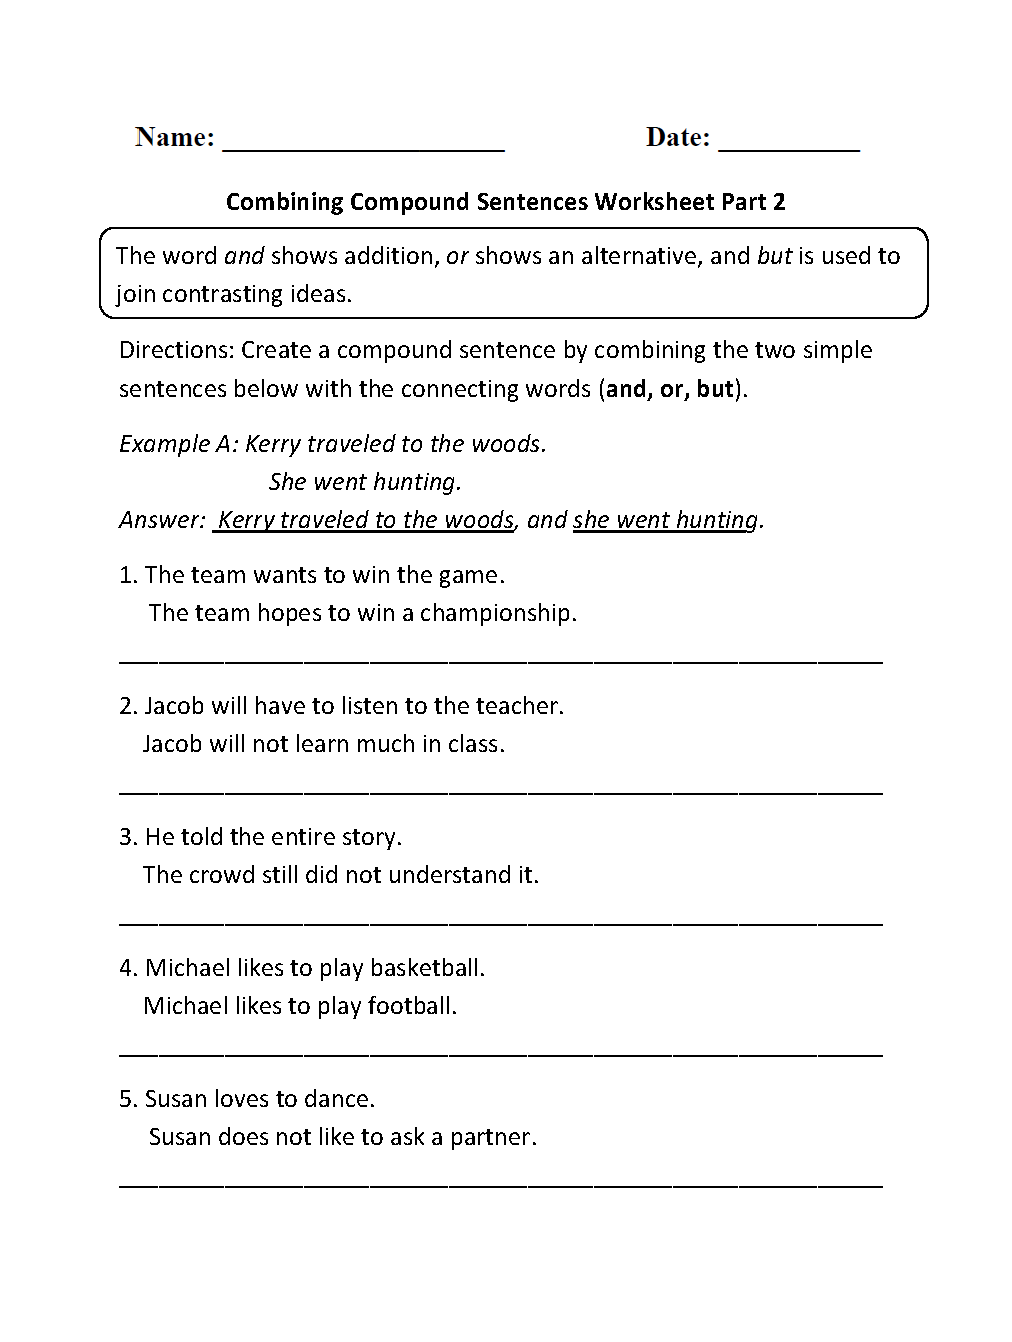 compound-sentences-worksheets-combining-compound-sentences-worksheet